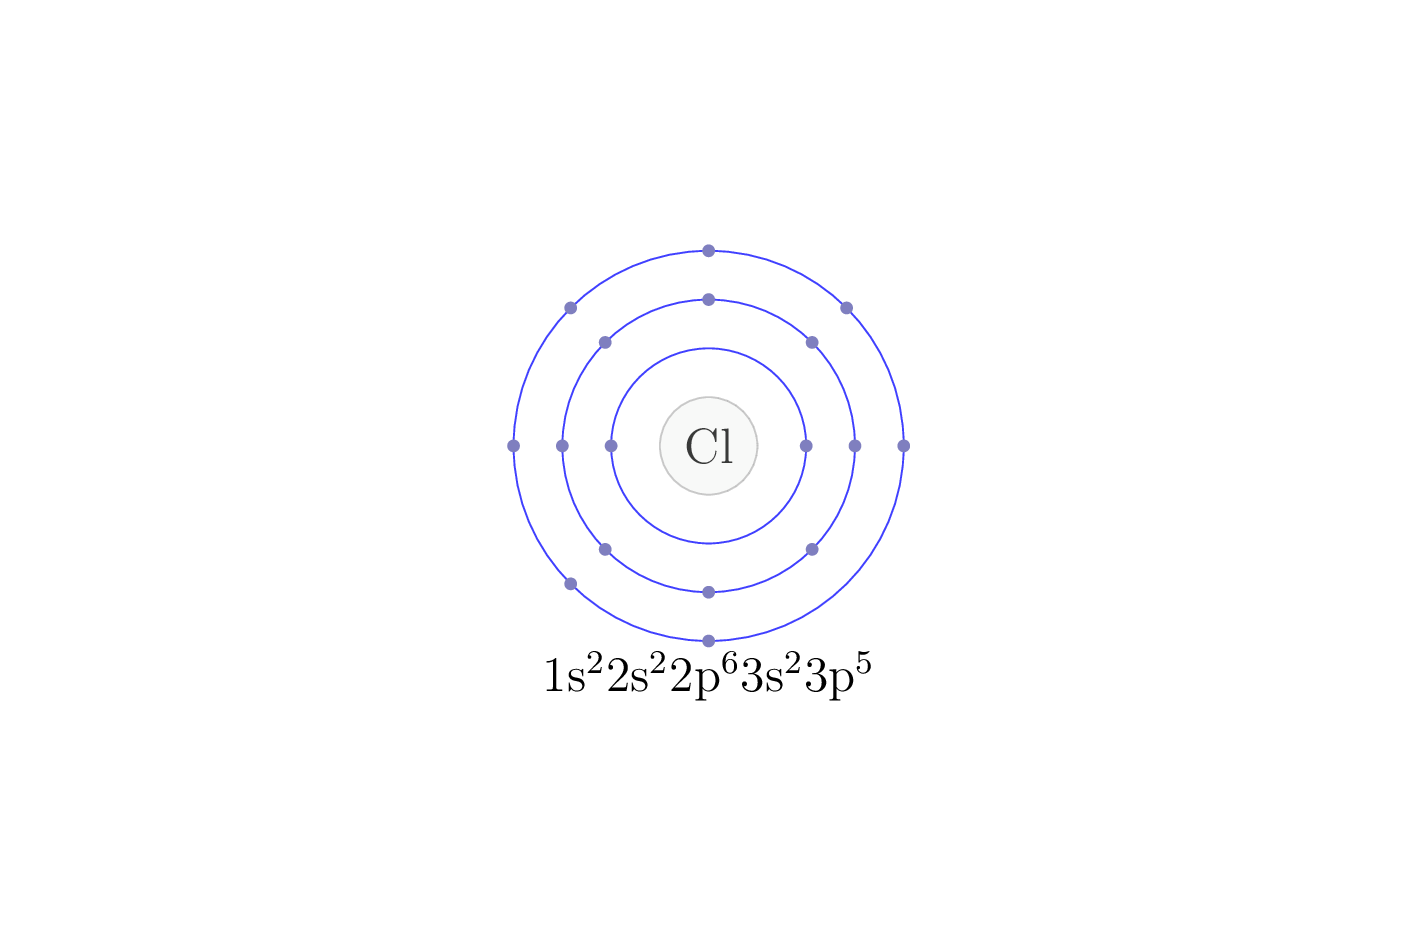 electron configuration of element Cl